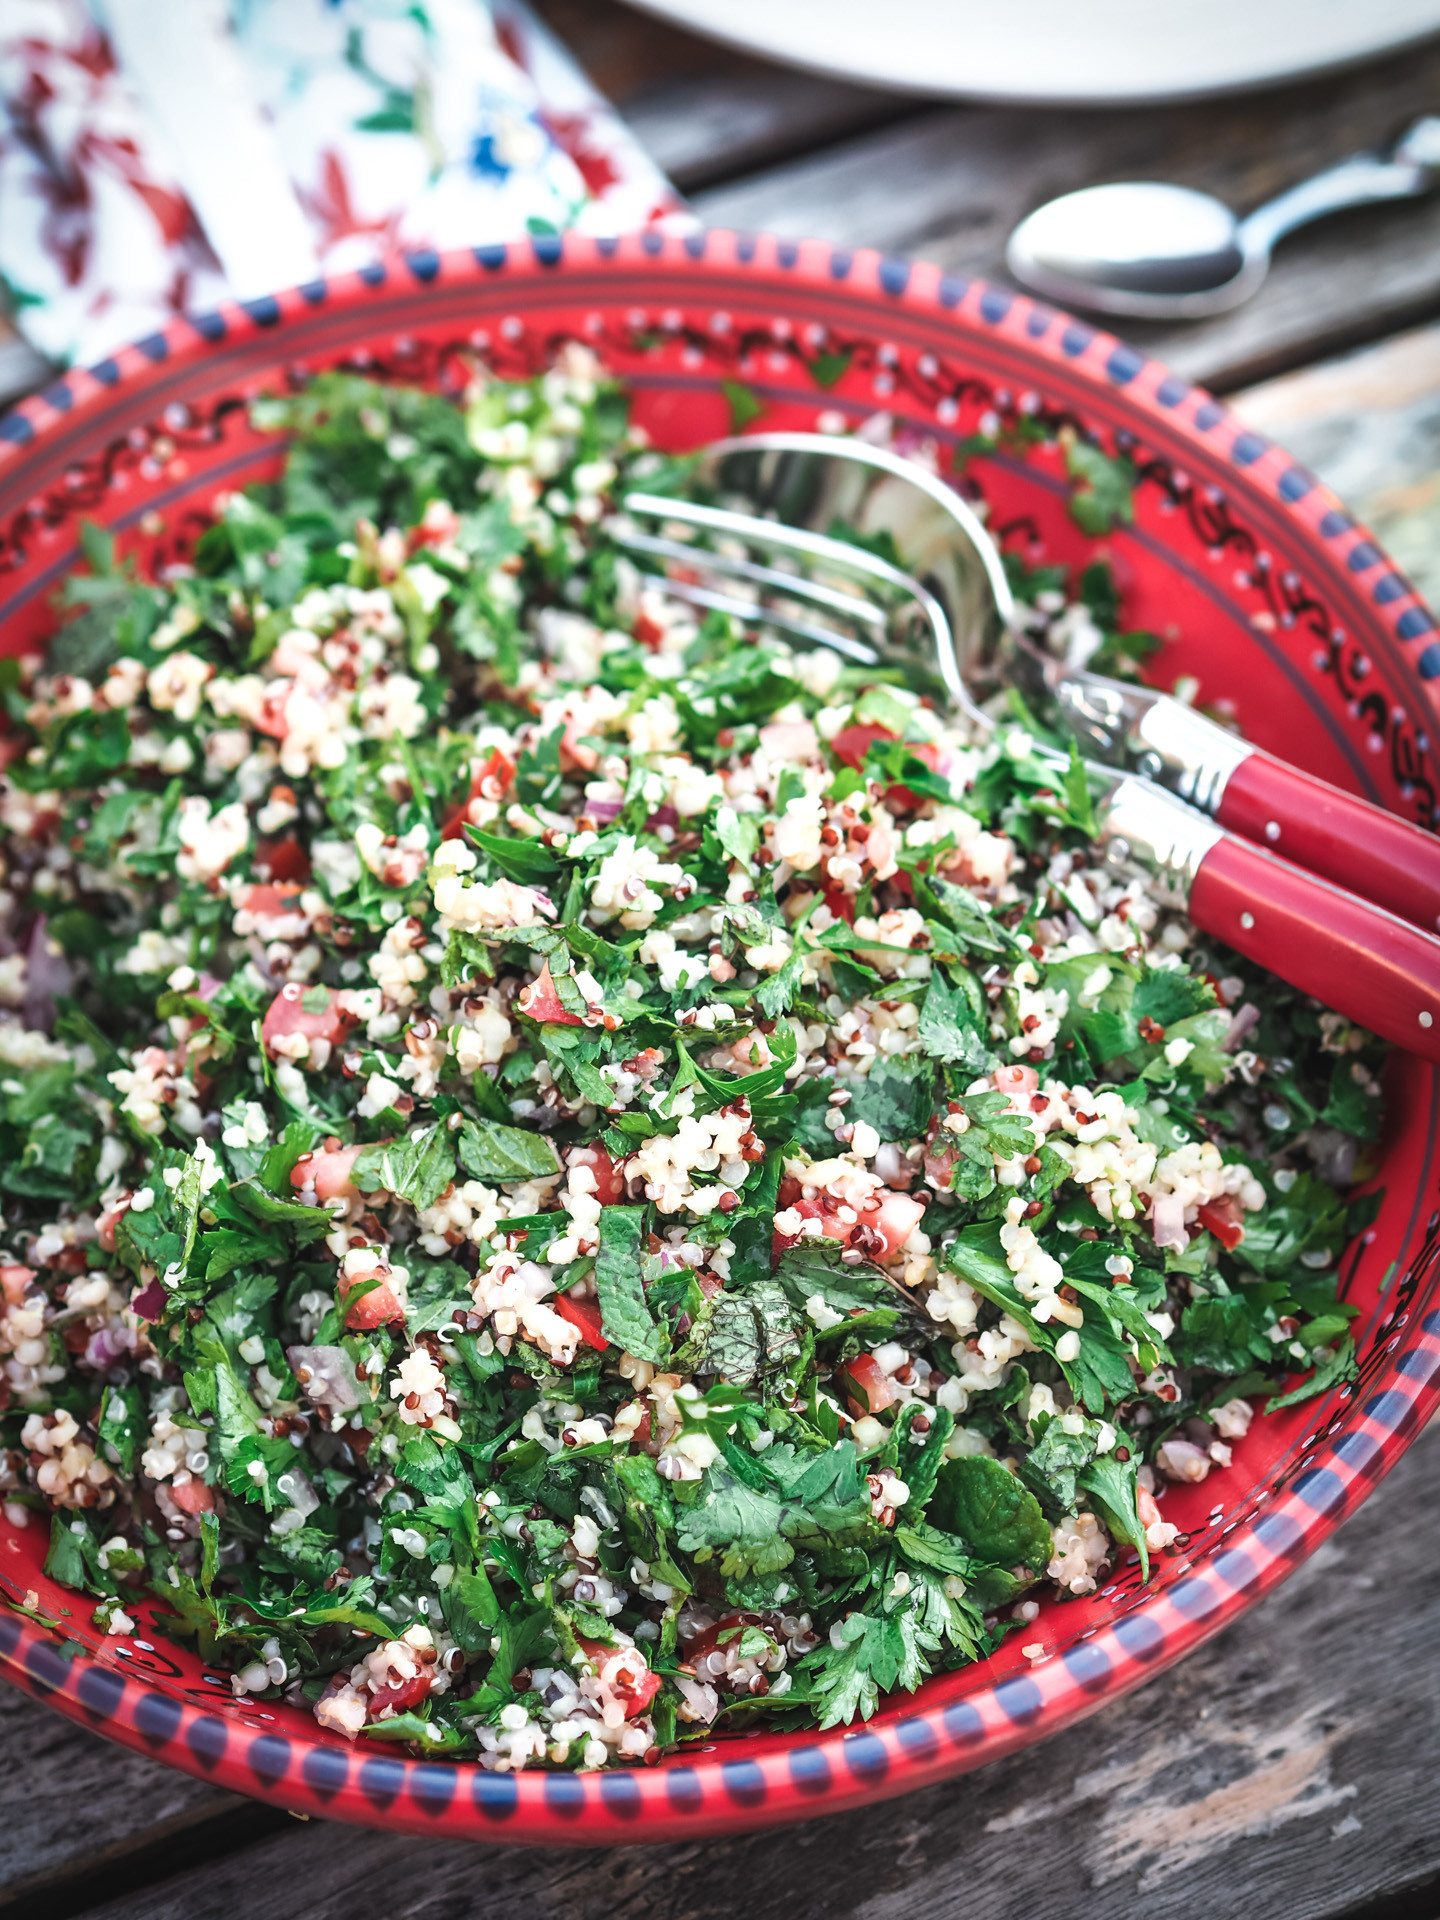 Salade de quinoa aux herbes fraîches façon taboulé libanais